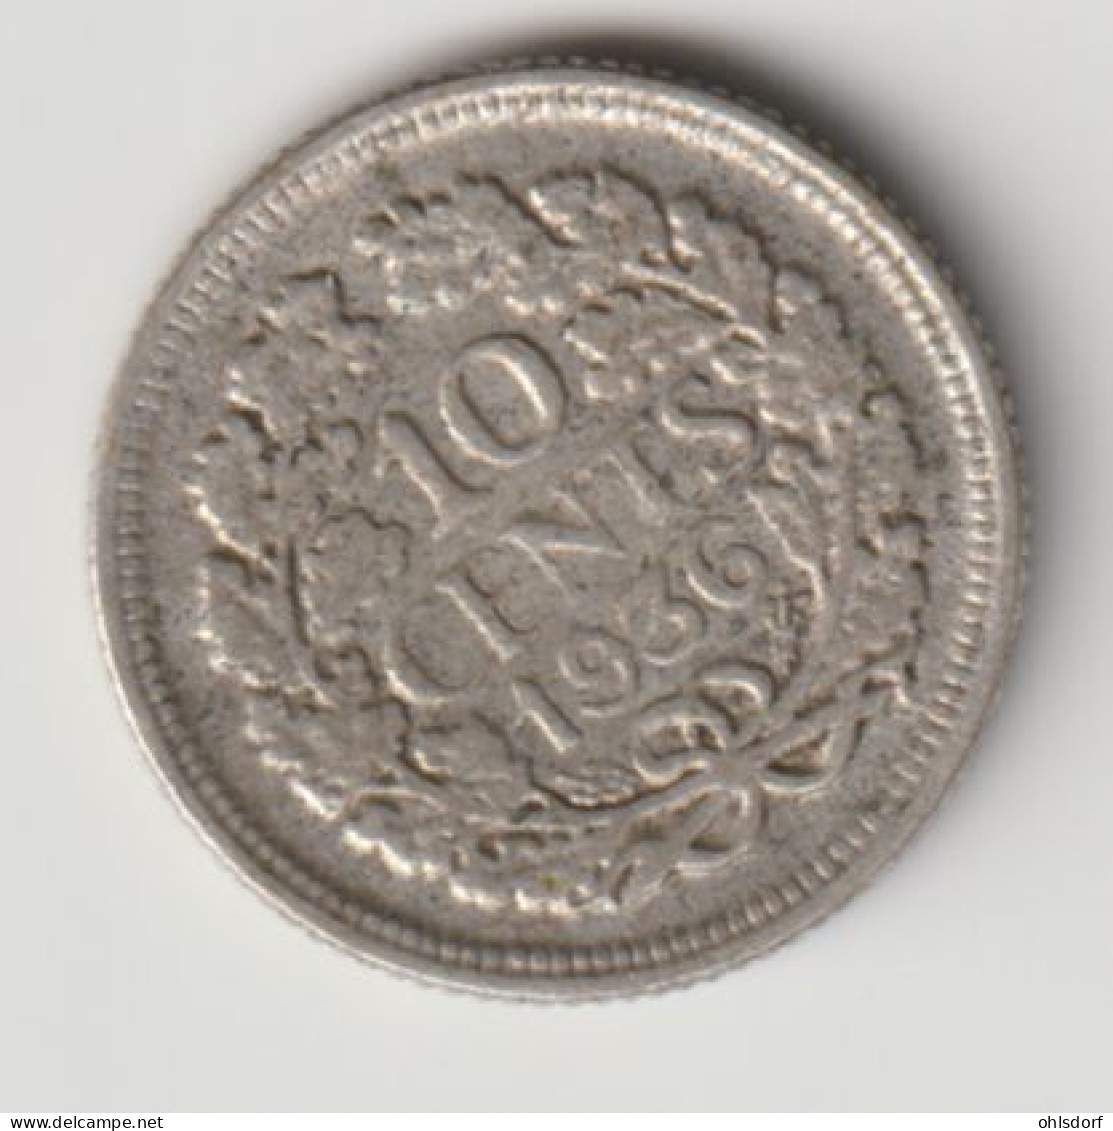 NEDERLAND 1936: 10 Cents, Silver, KM 164 - 10 Centavos